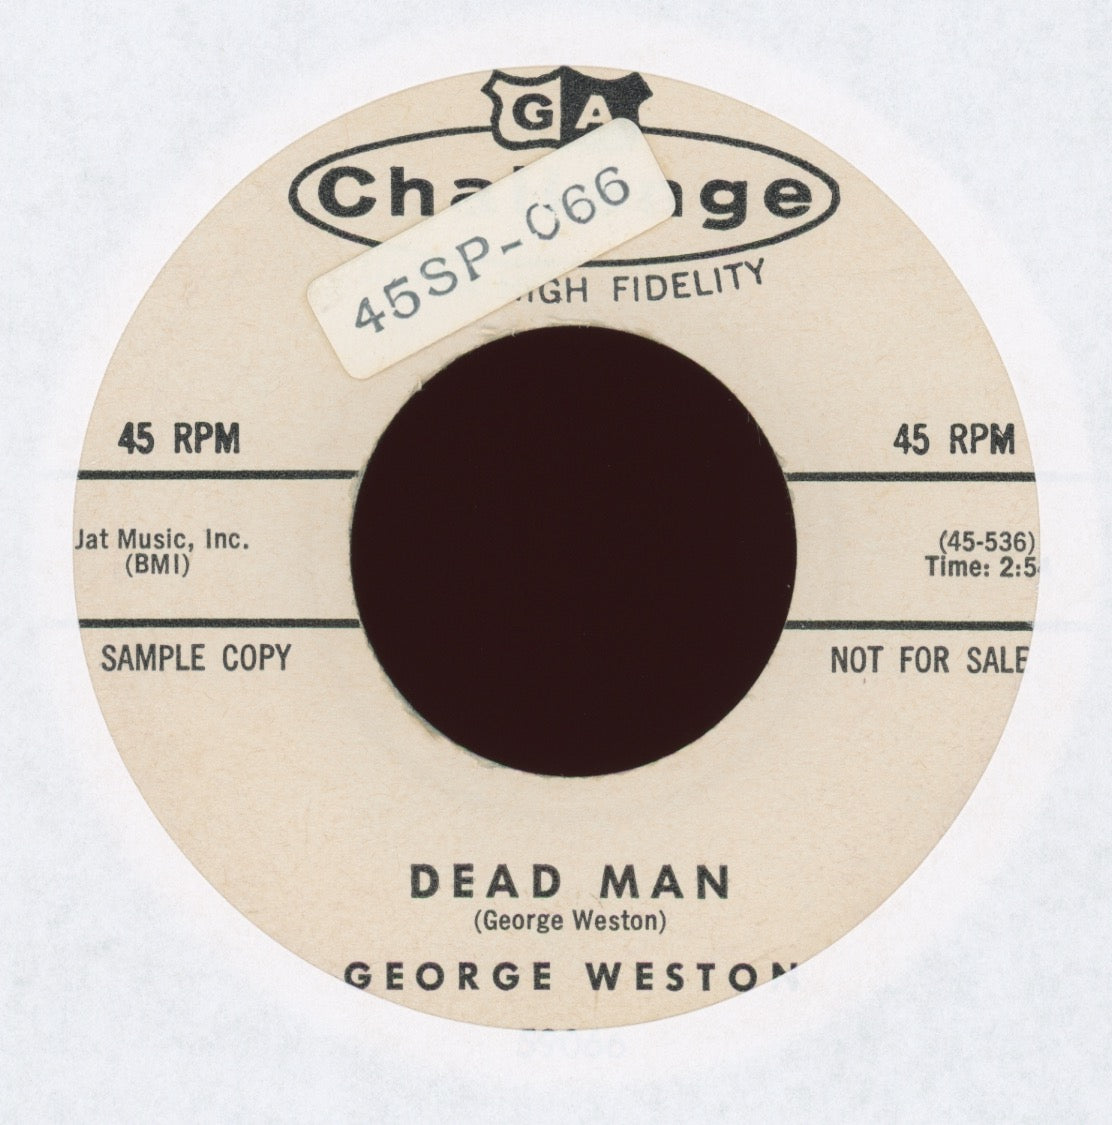 George Weston - Dead Man on Challenge Promo